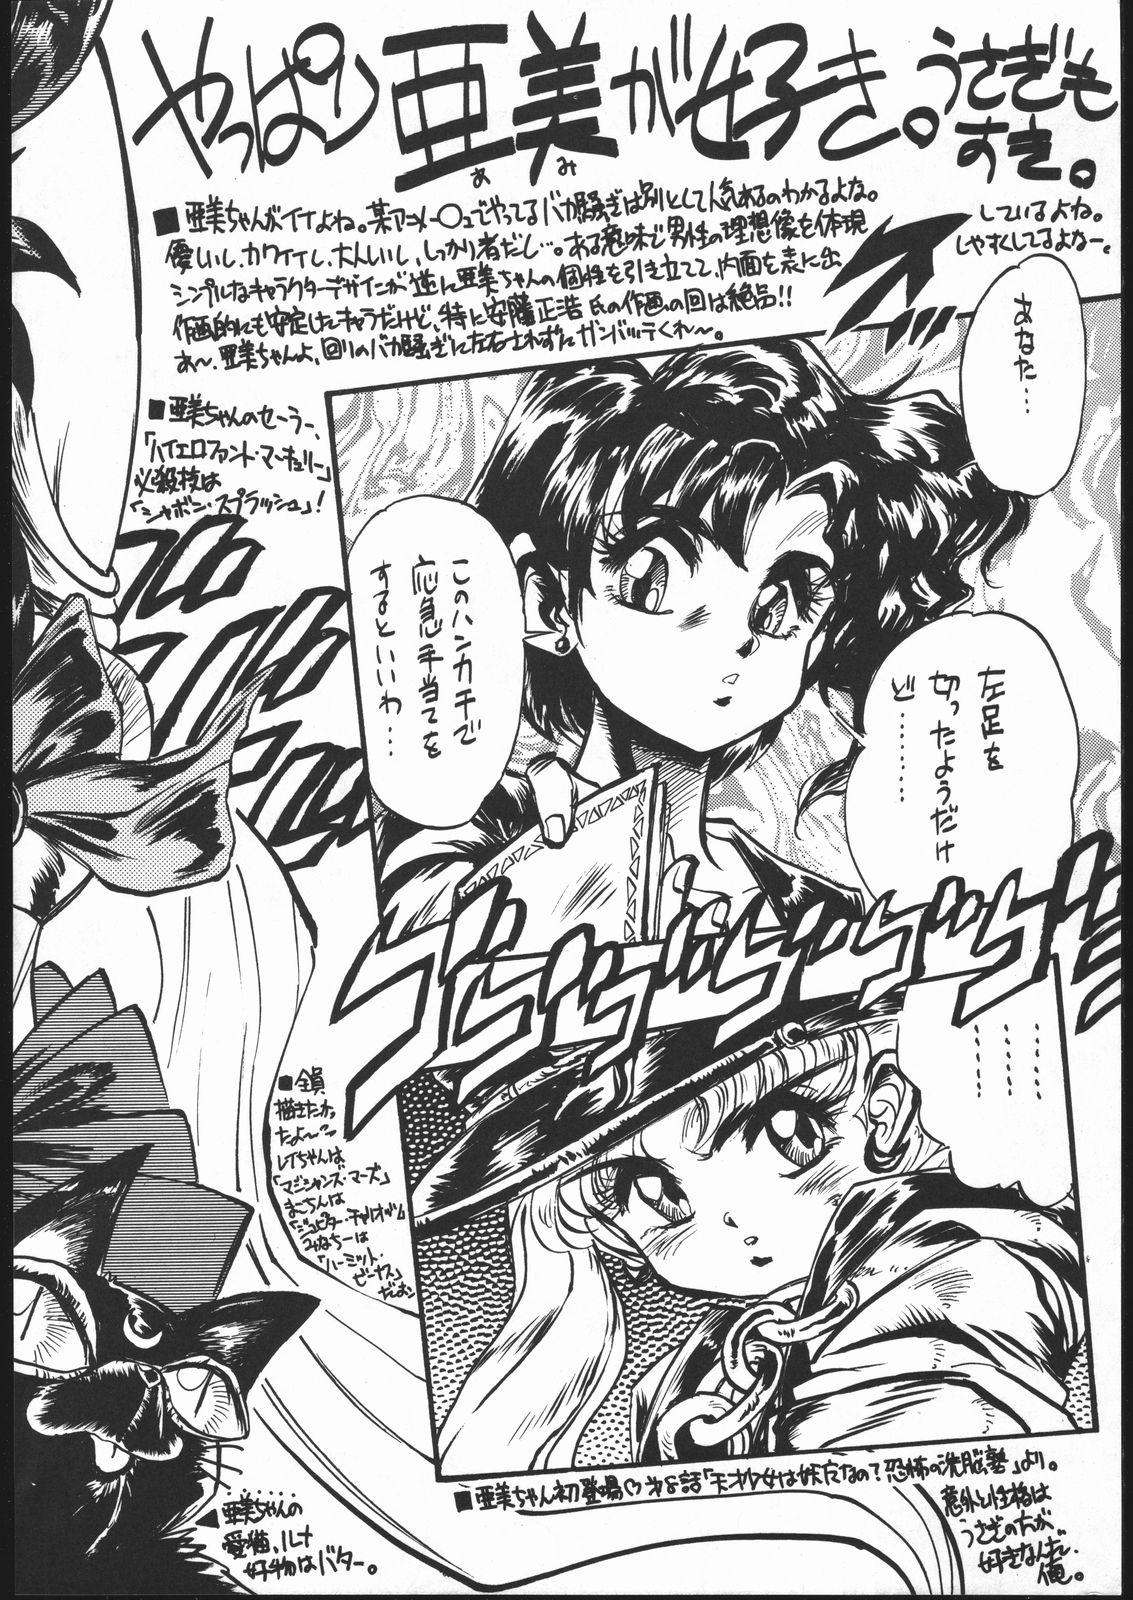 Anal Gape Gekkou Seleneti 2 - Sailor moon Dominate - Page 3